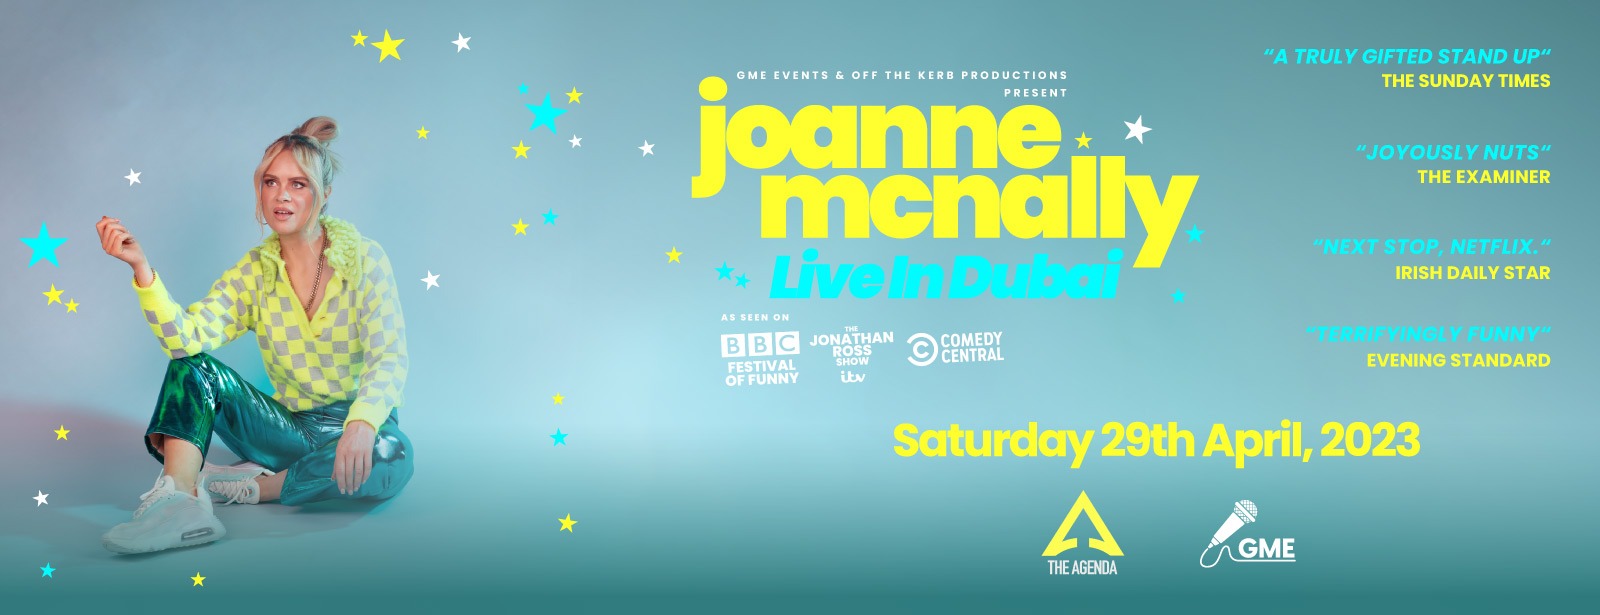 Joanne McNally Live in Dubai - Coming Soon in UAE